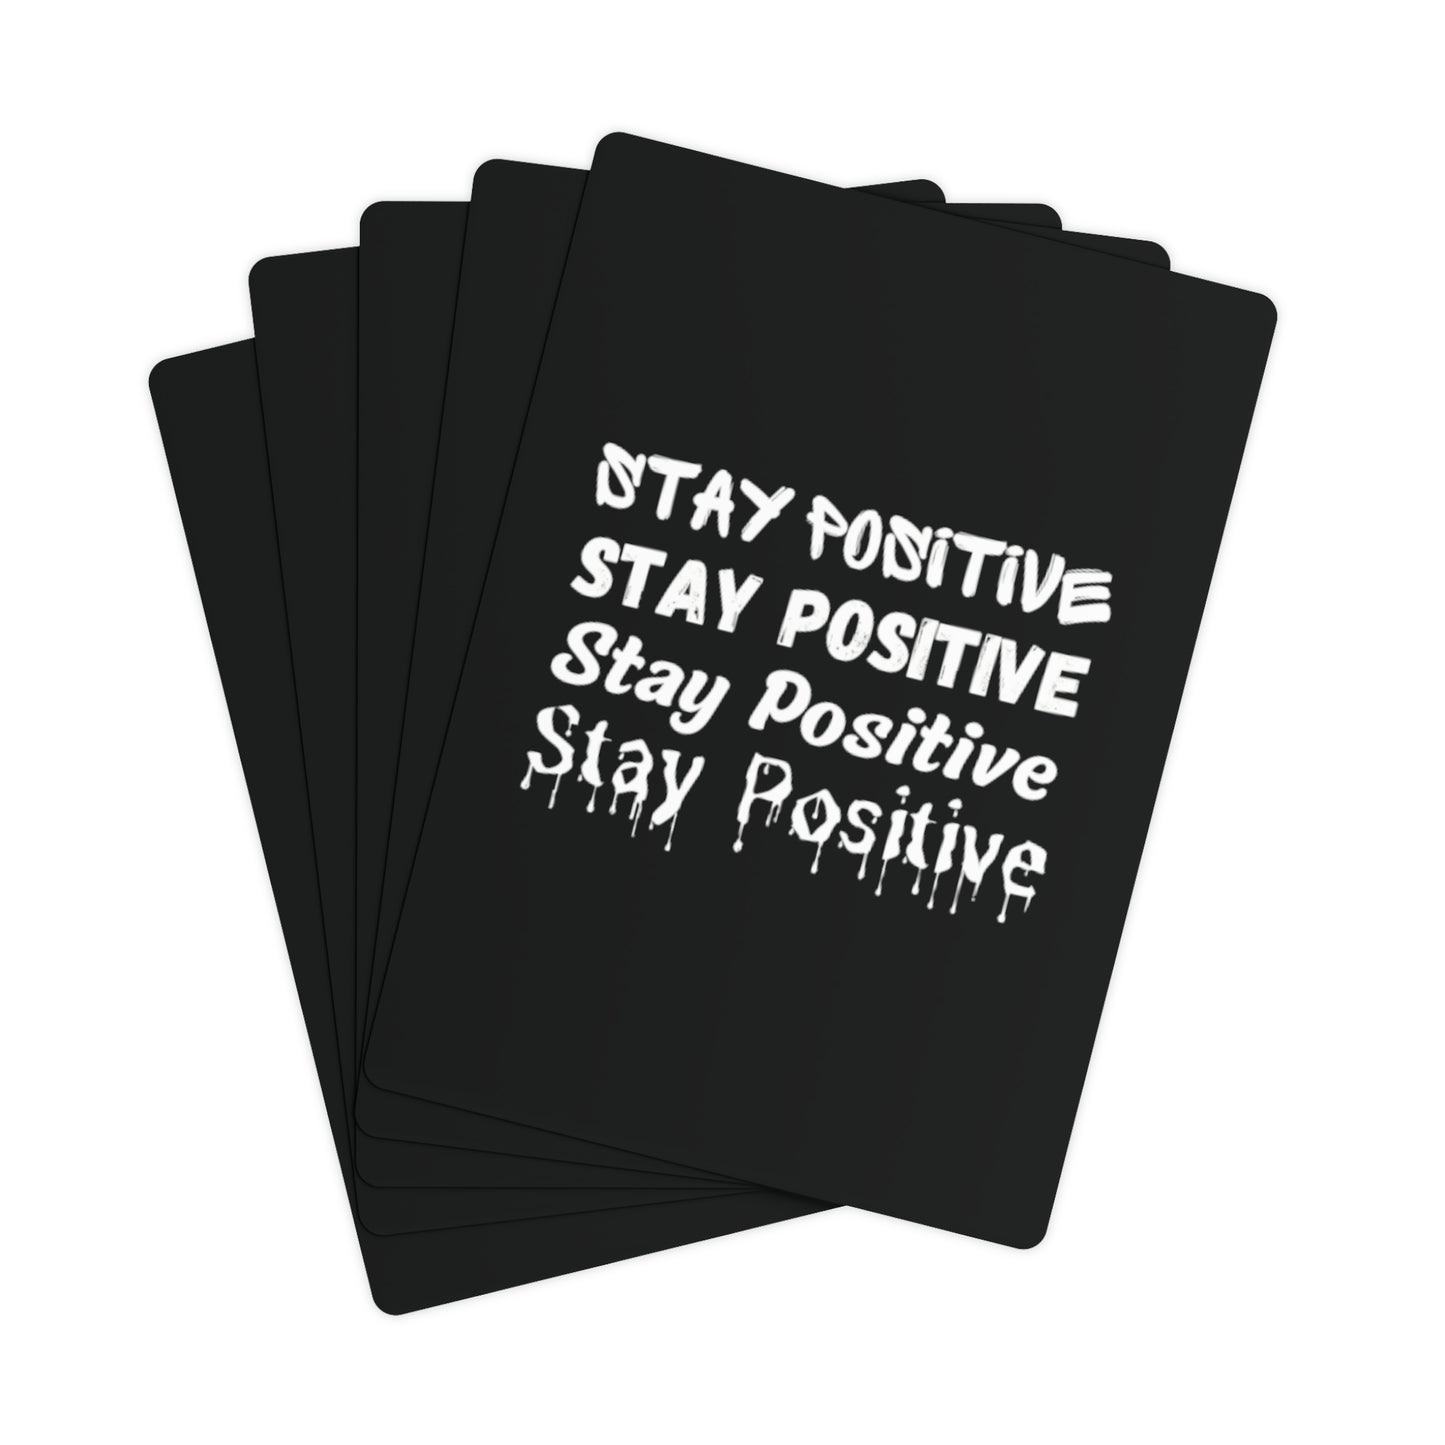 Stay Positive Poker Cards